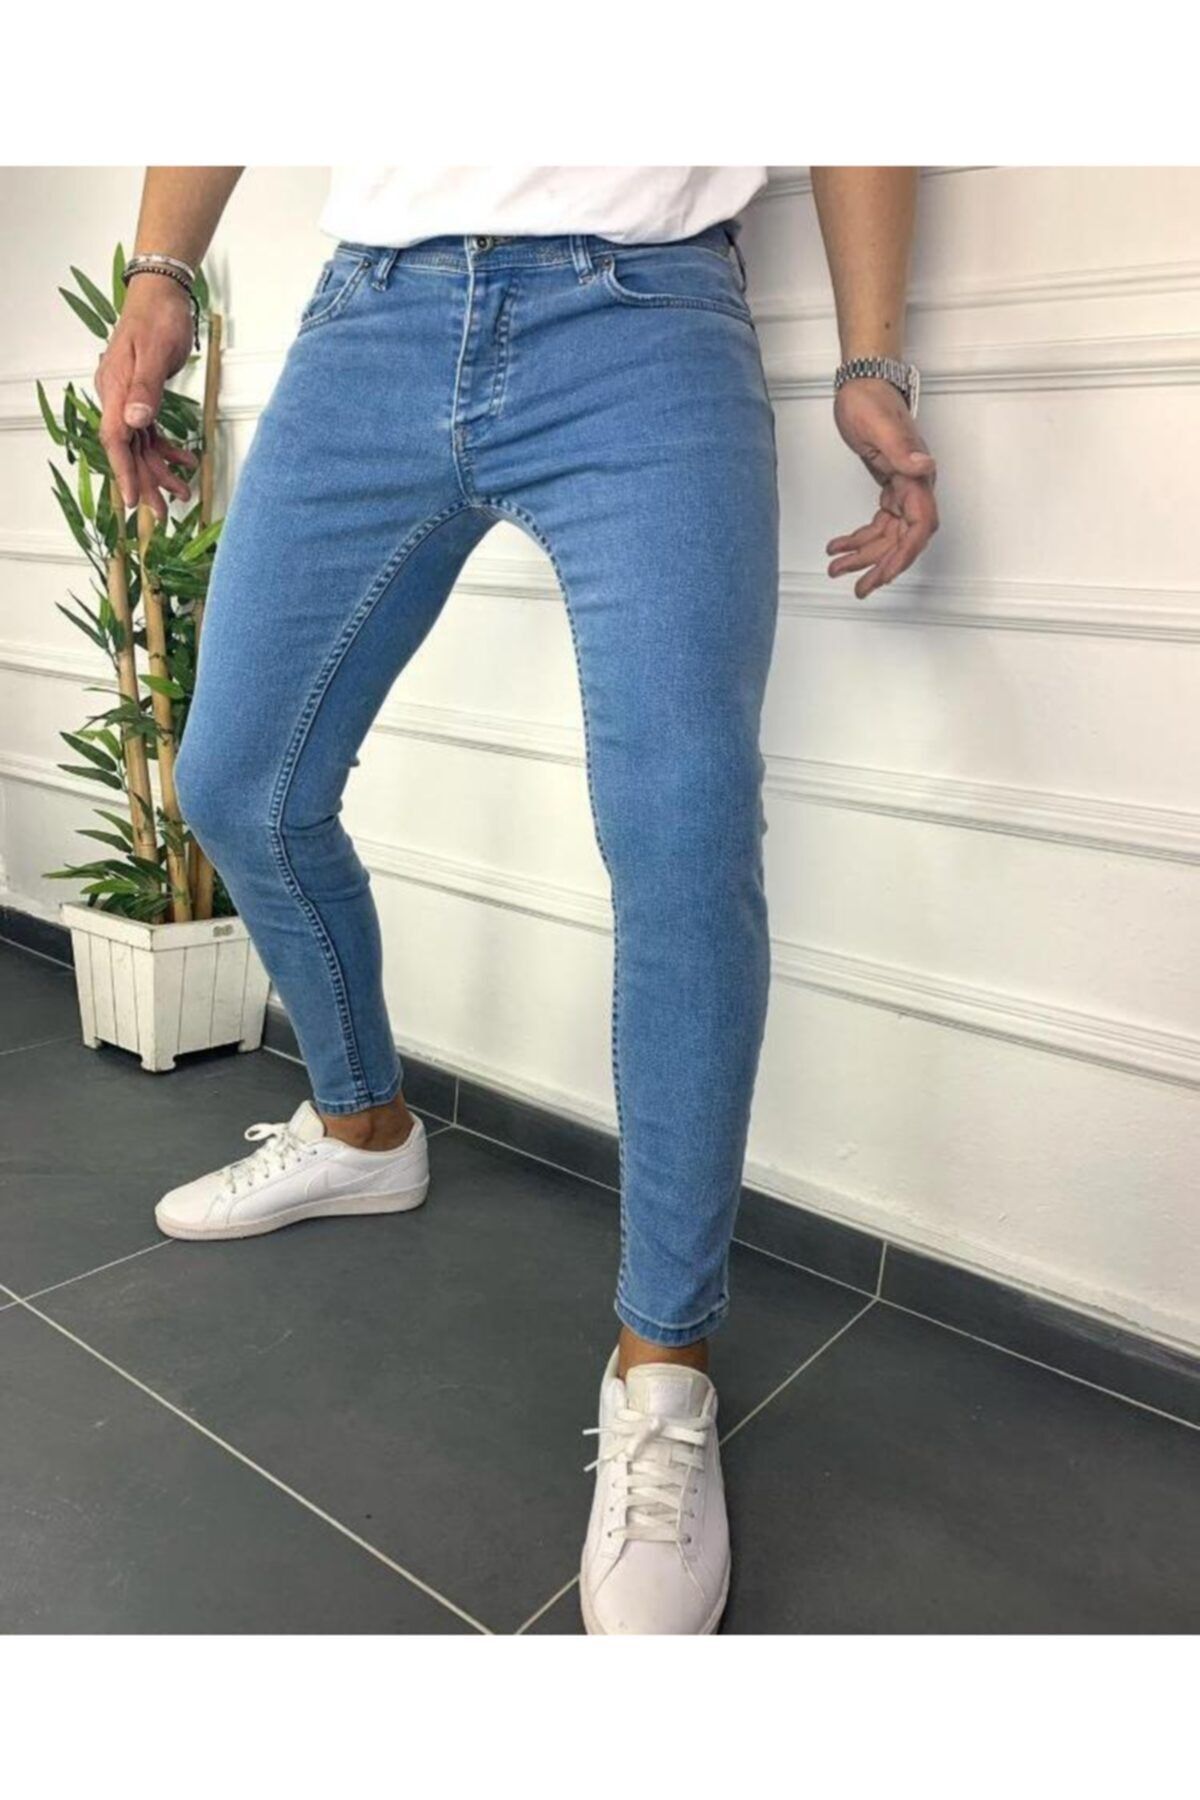 MARTIN MIX'S Erkek  Mavi Skinny Fit Kot Jeans Likralı Bilek Kalıp Pantolon